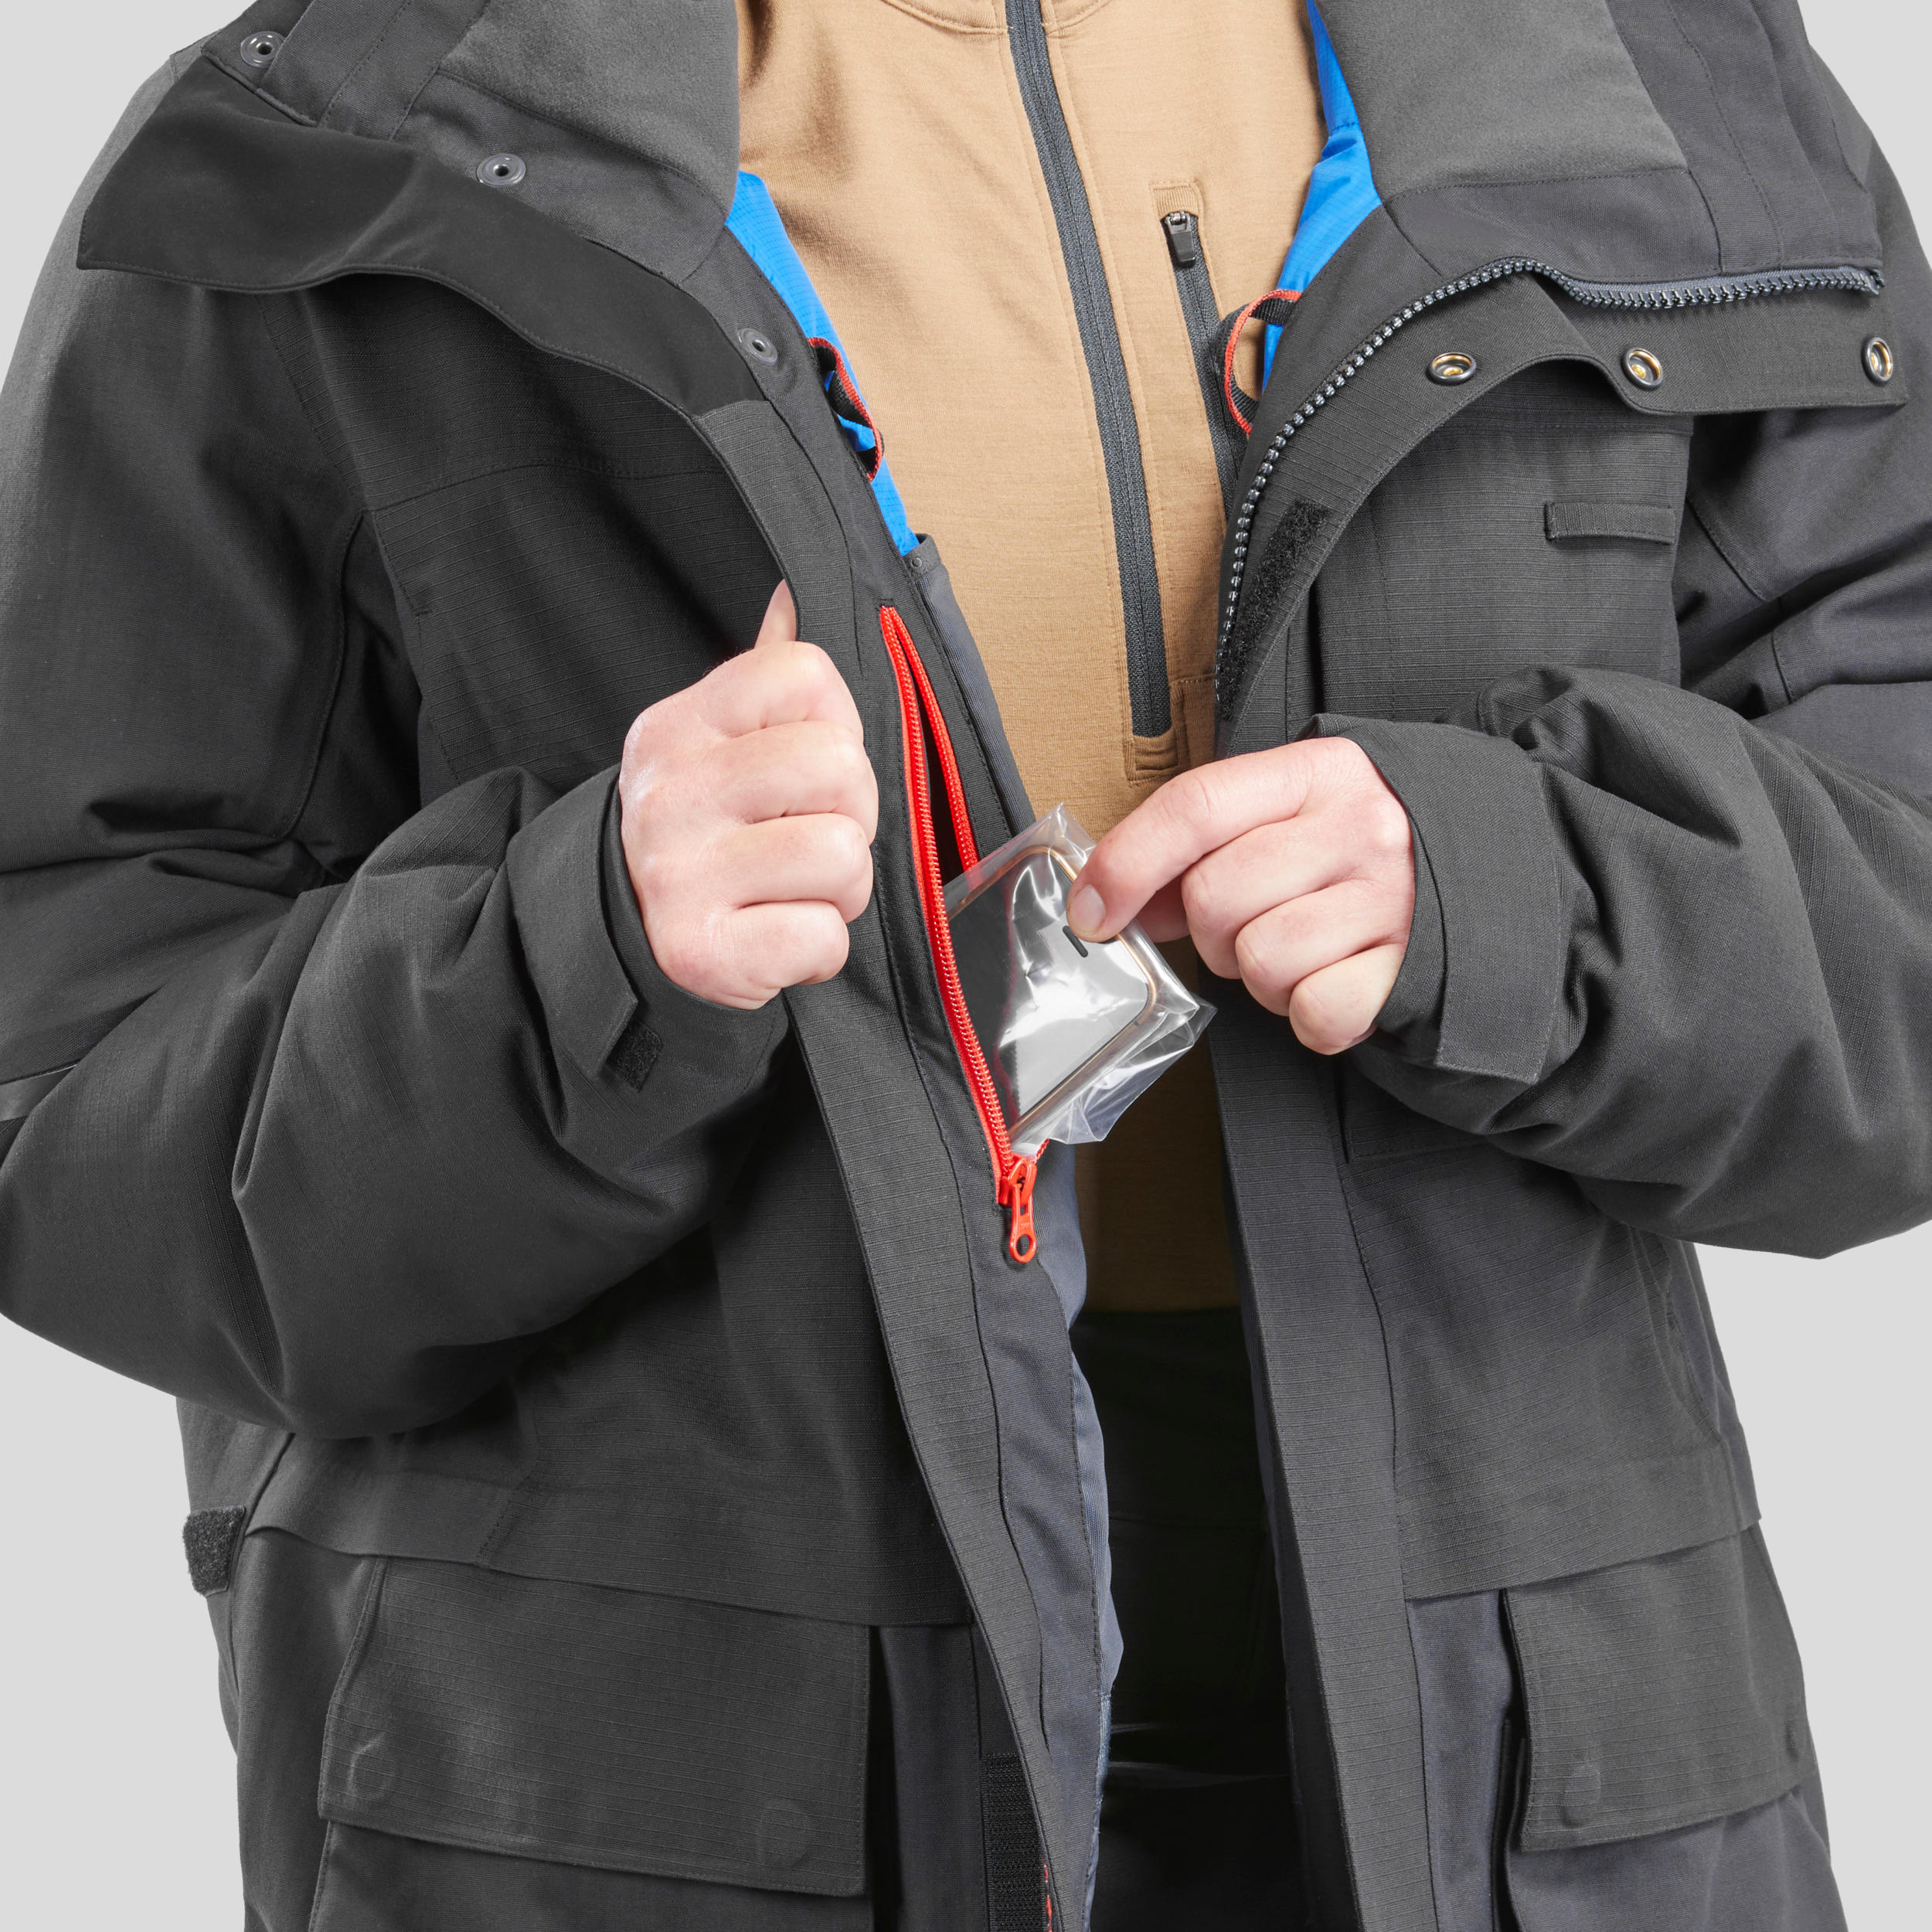 Unisex waterproof parka jacket - 900 - Black 13/21